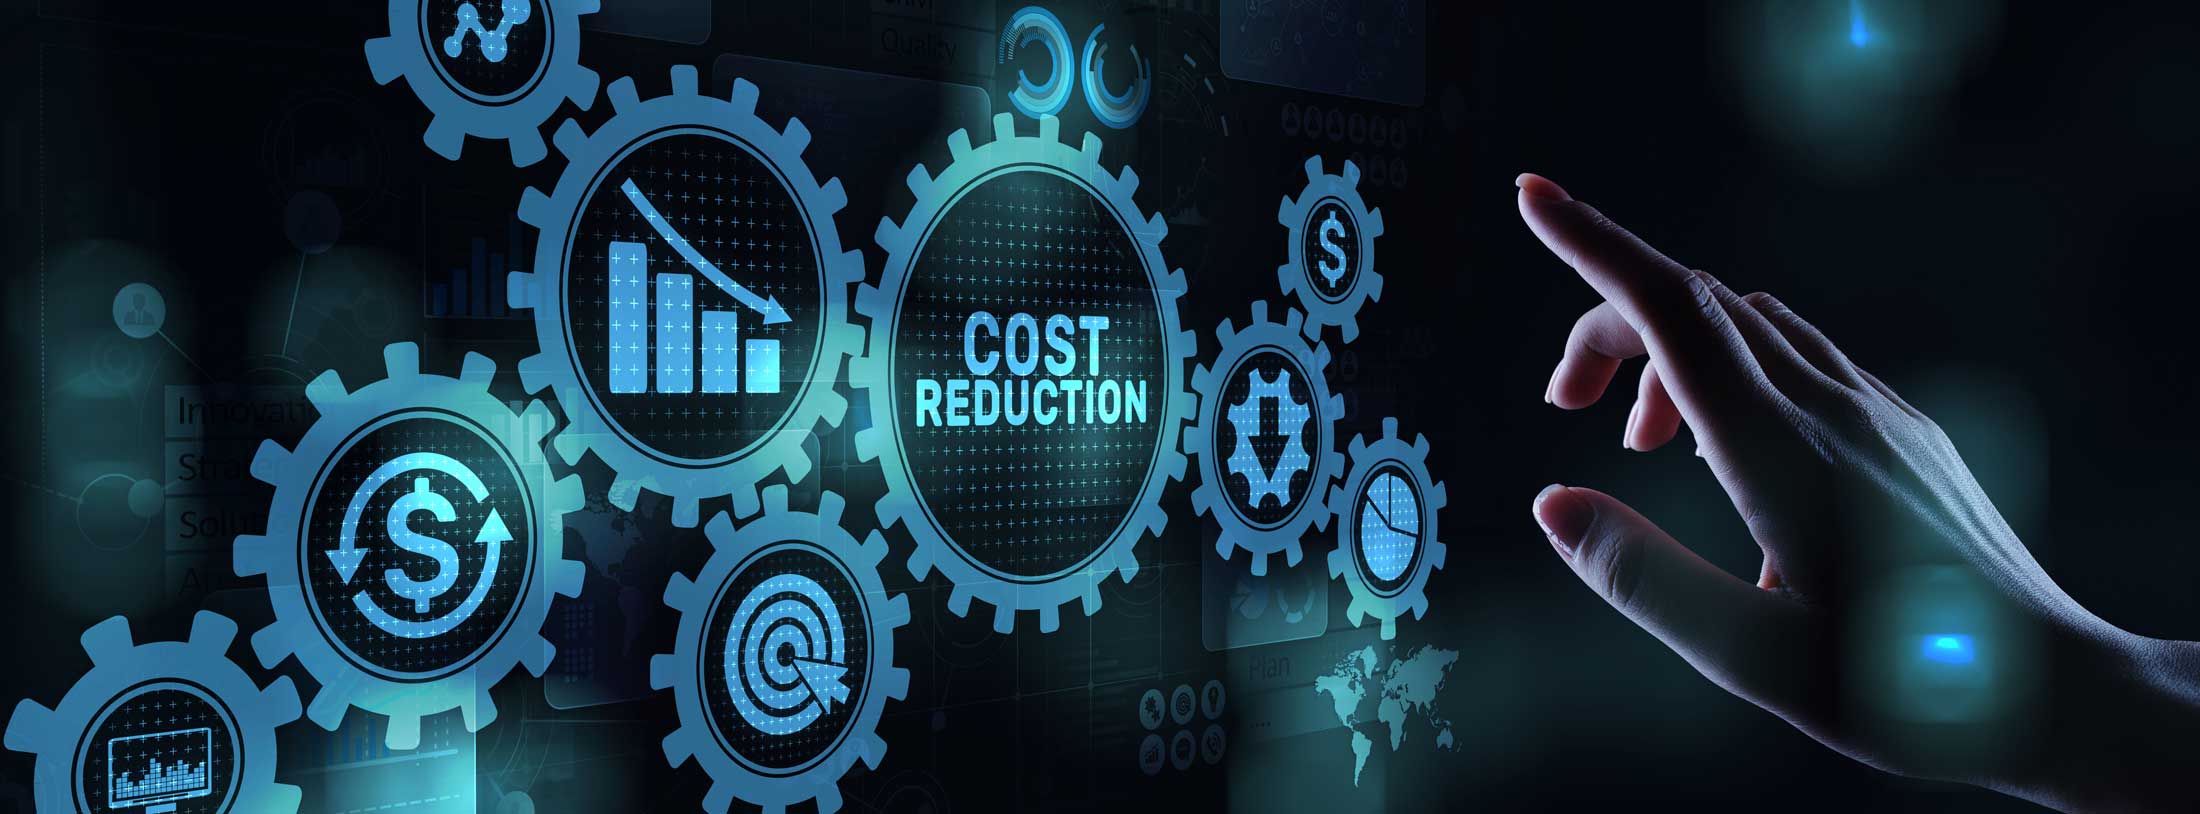 cost reduction illustration